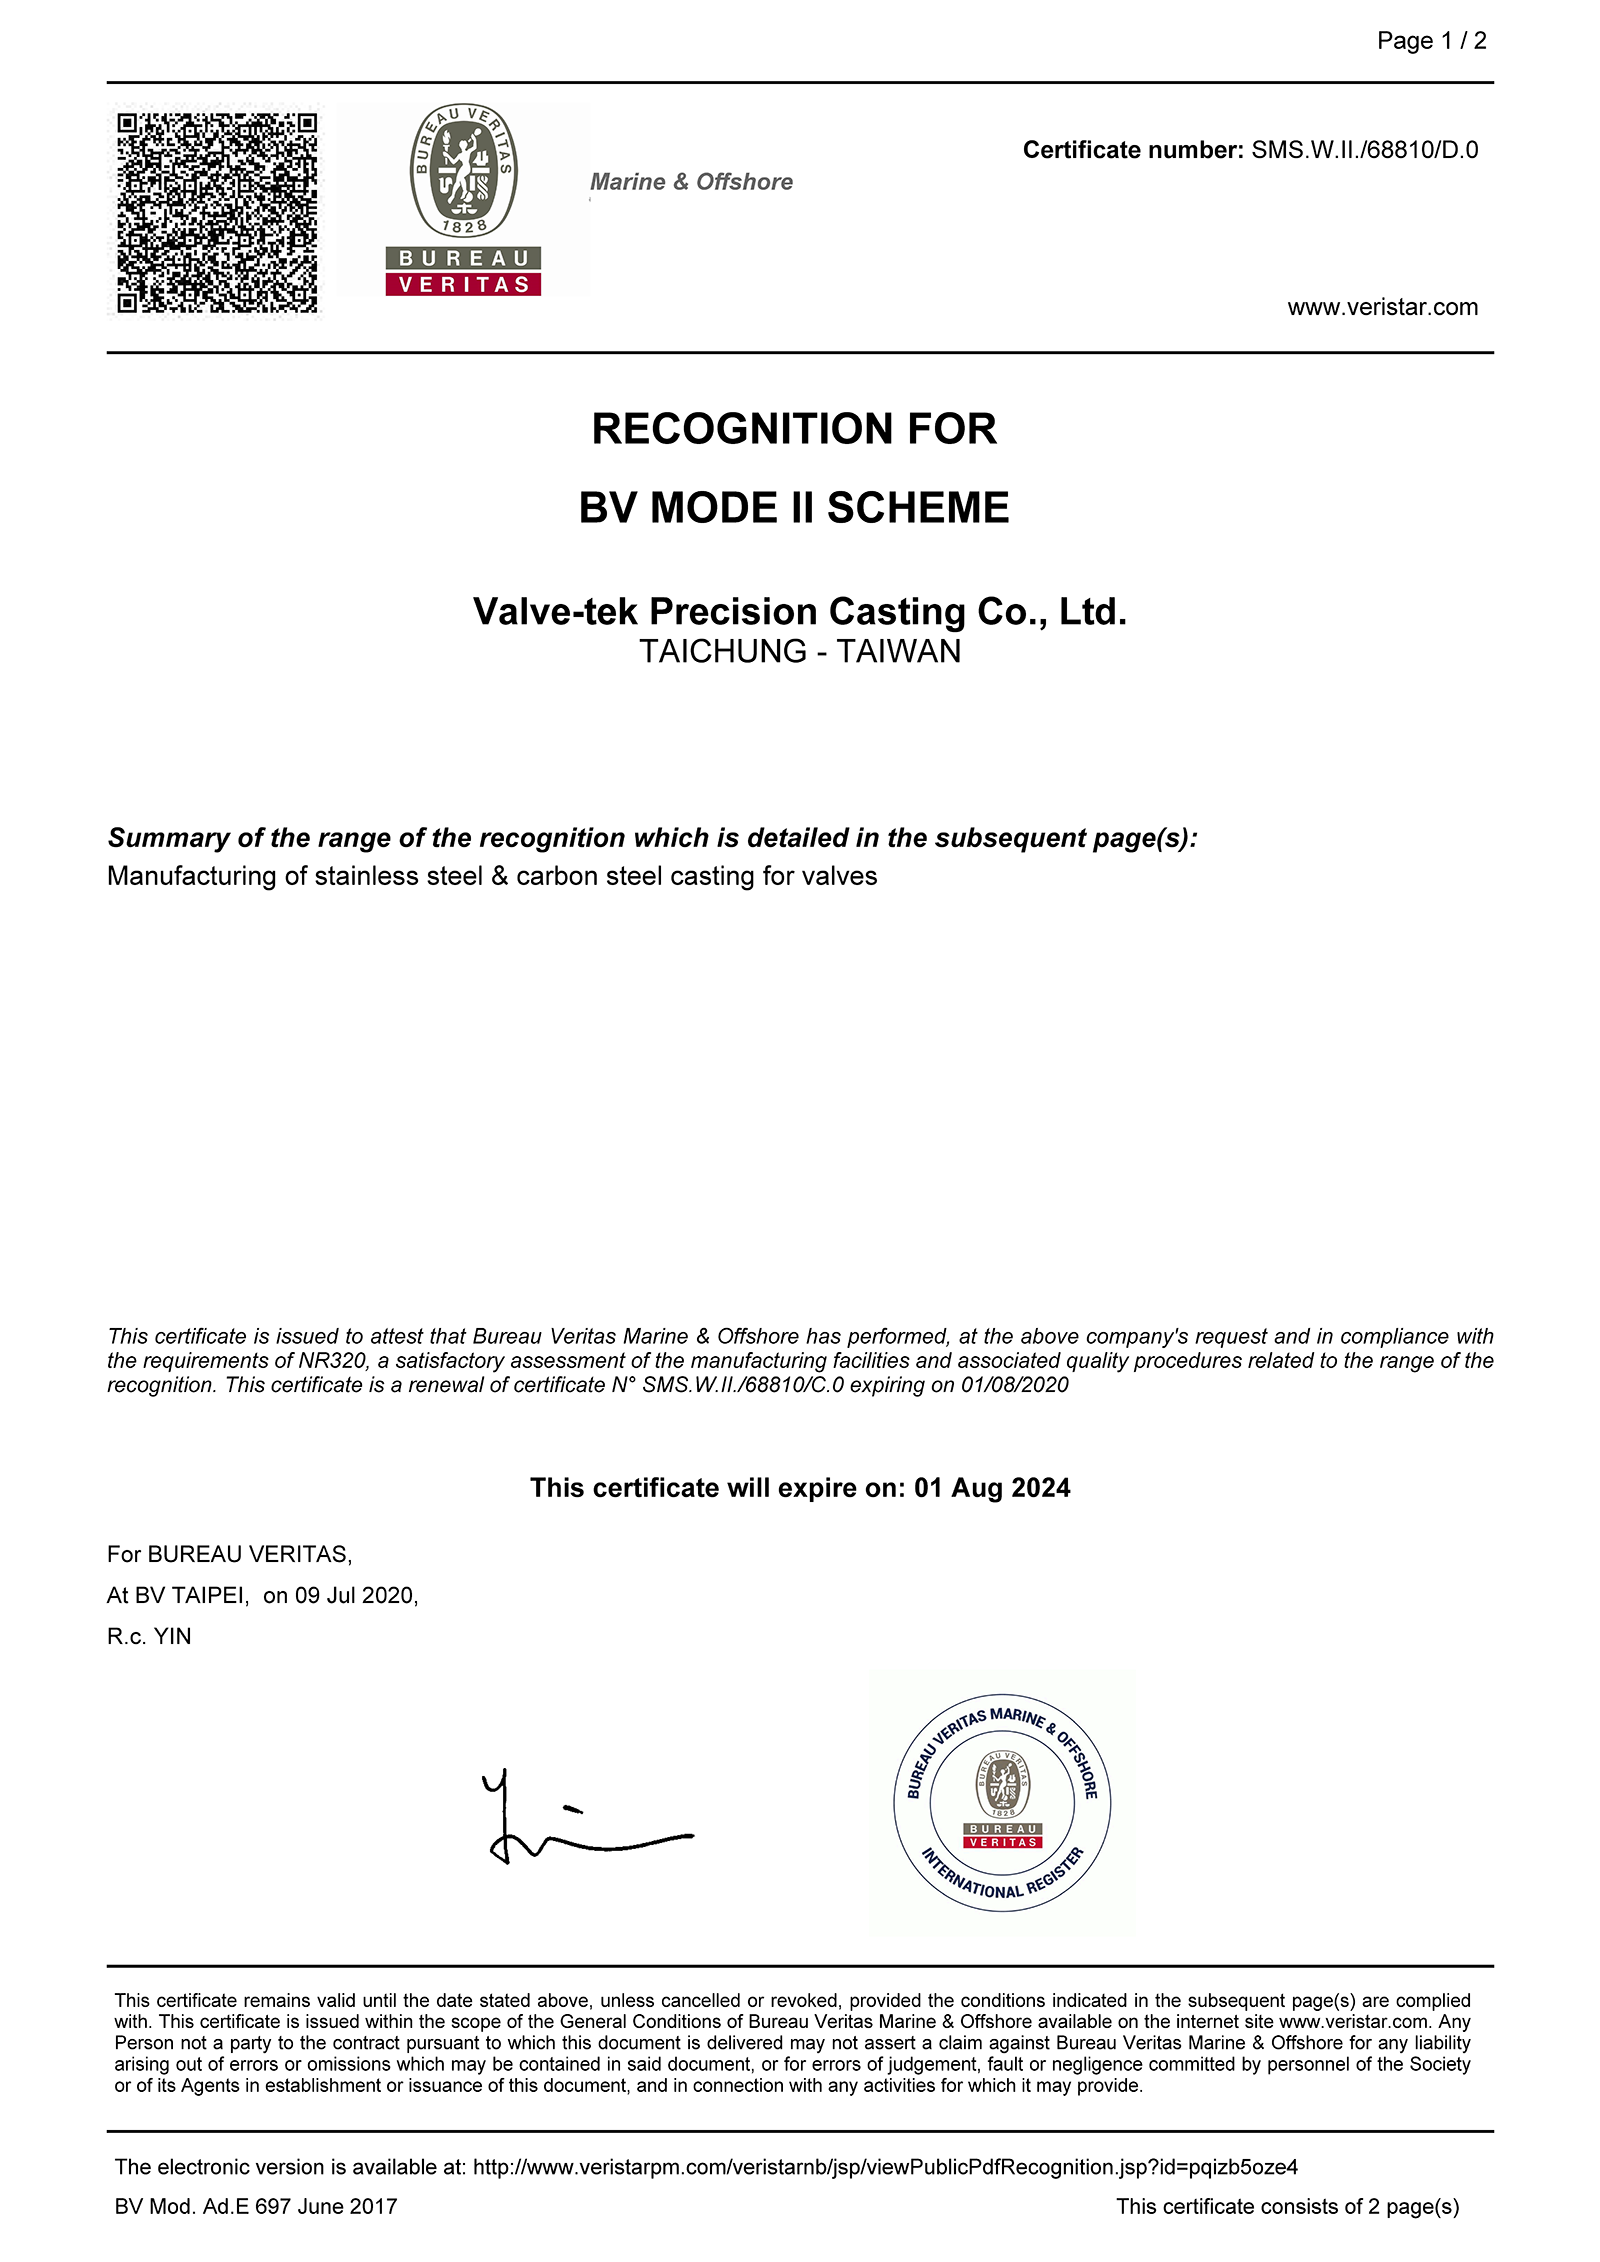 Valve-tek_BV (BUREAU VERITAS)Certificate